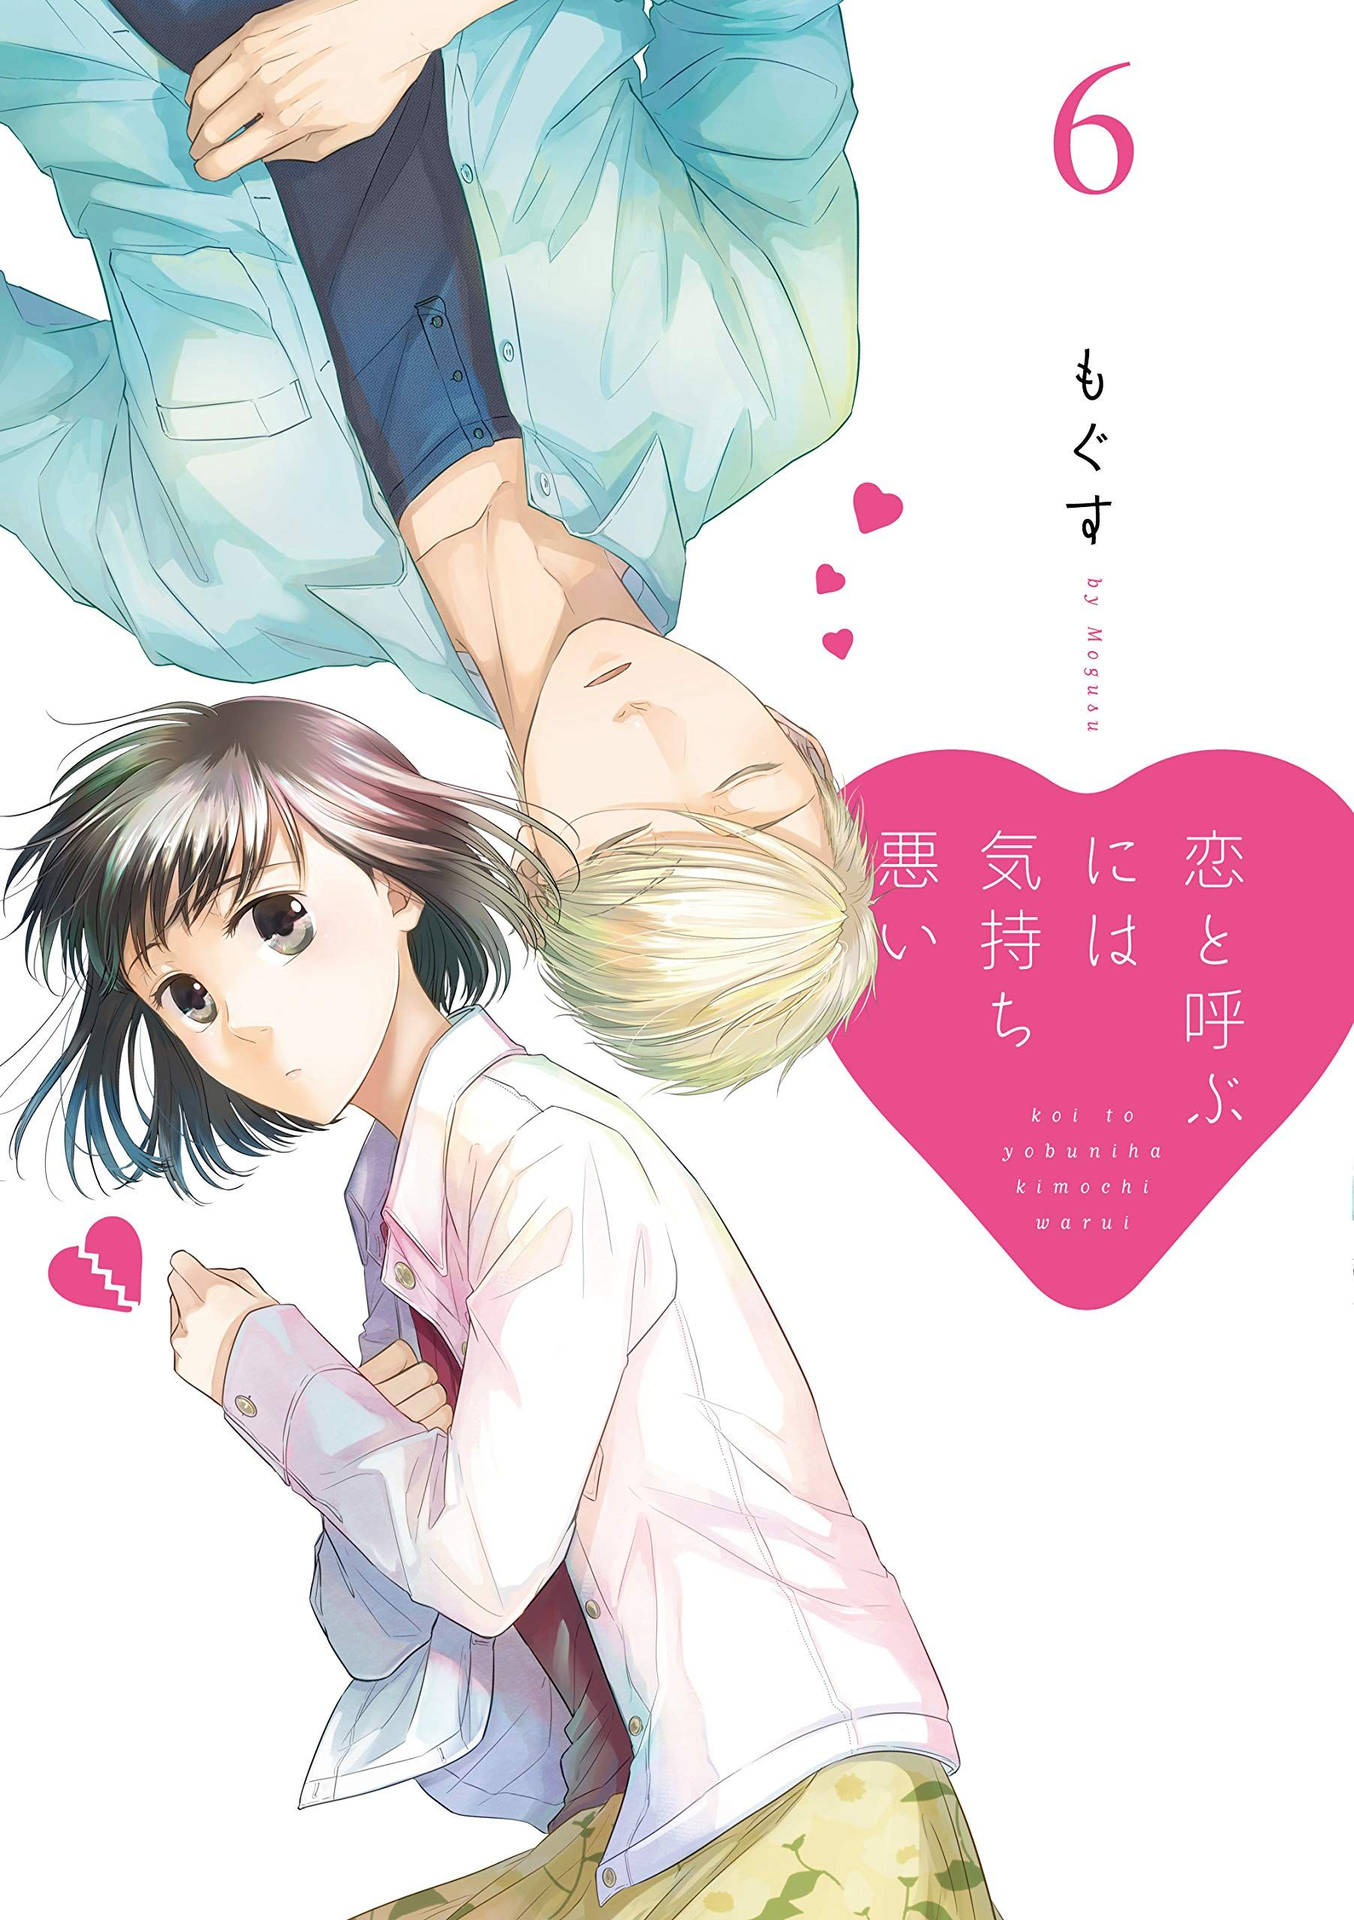 Koikimo Anime Series Romantic Poster Wallpaper